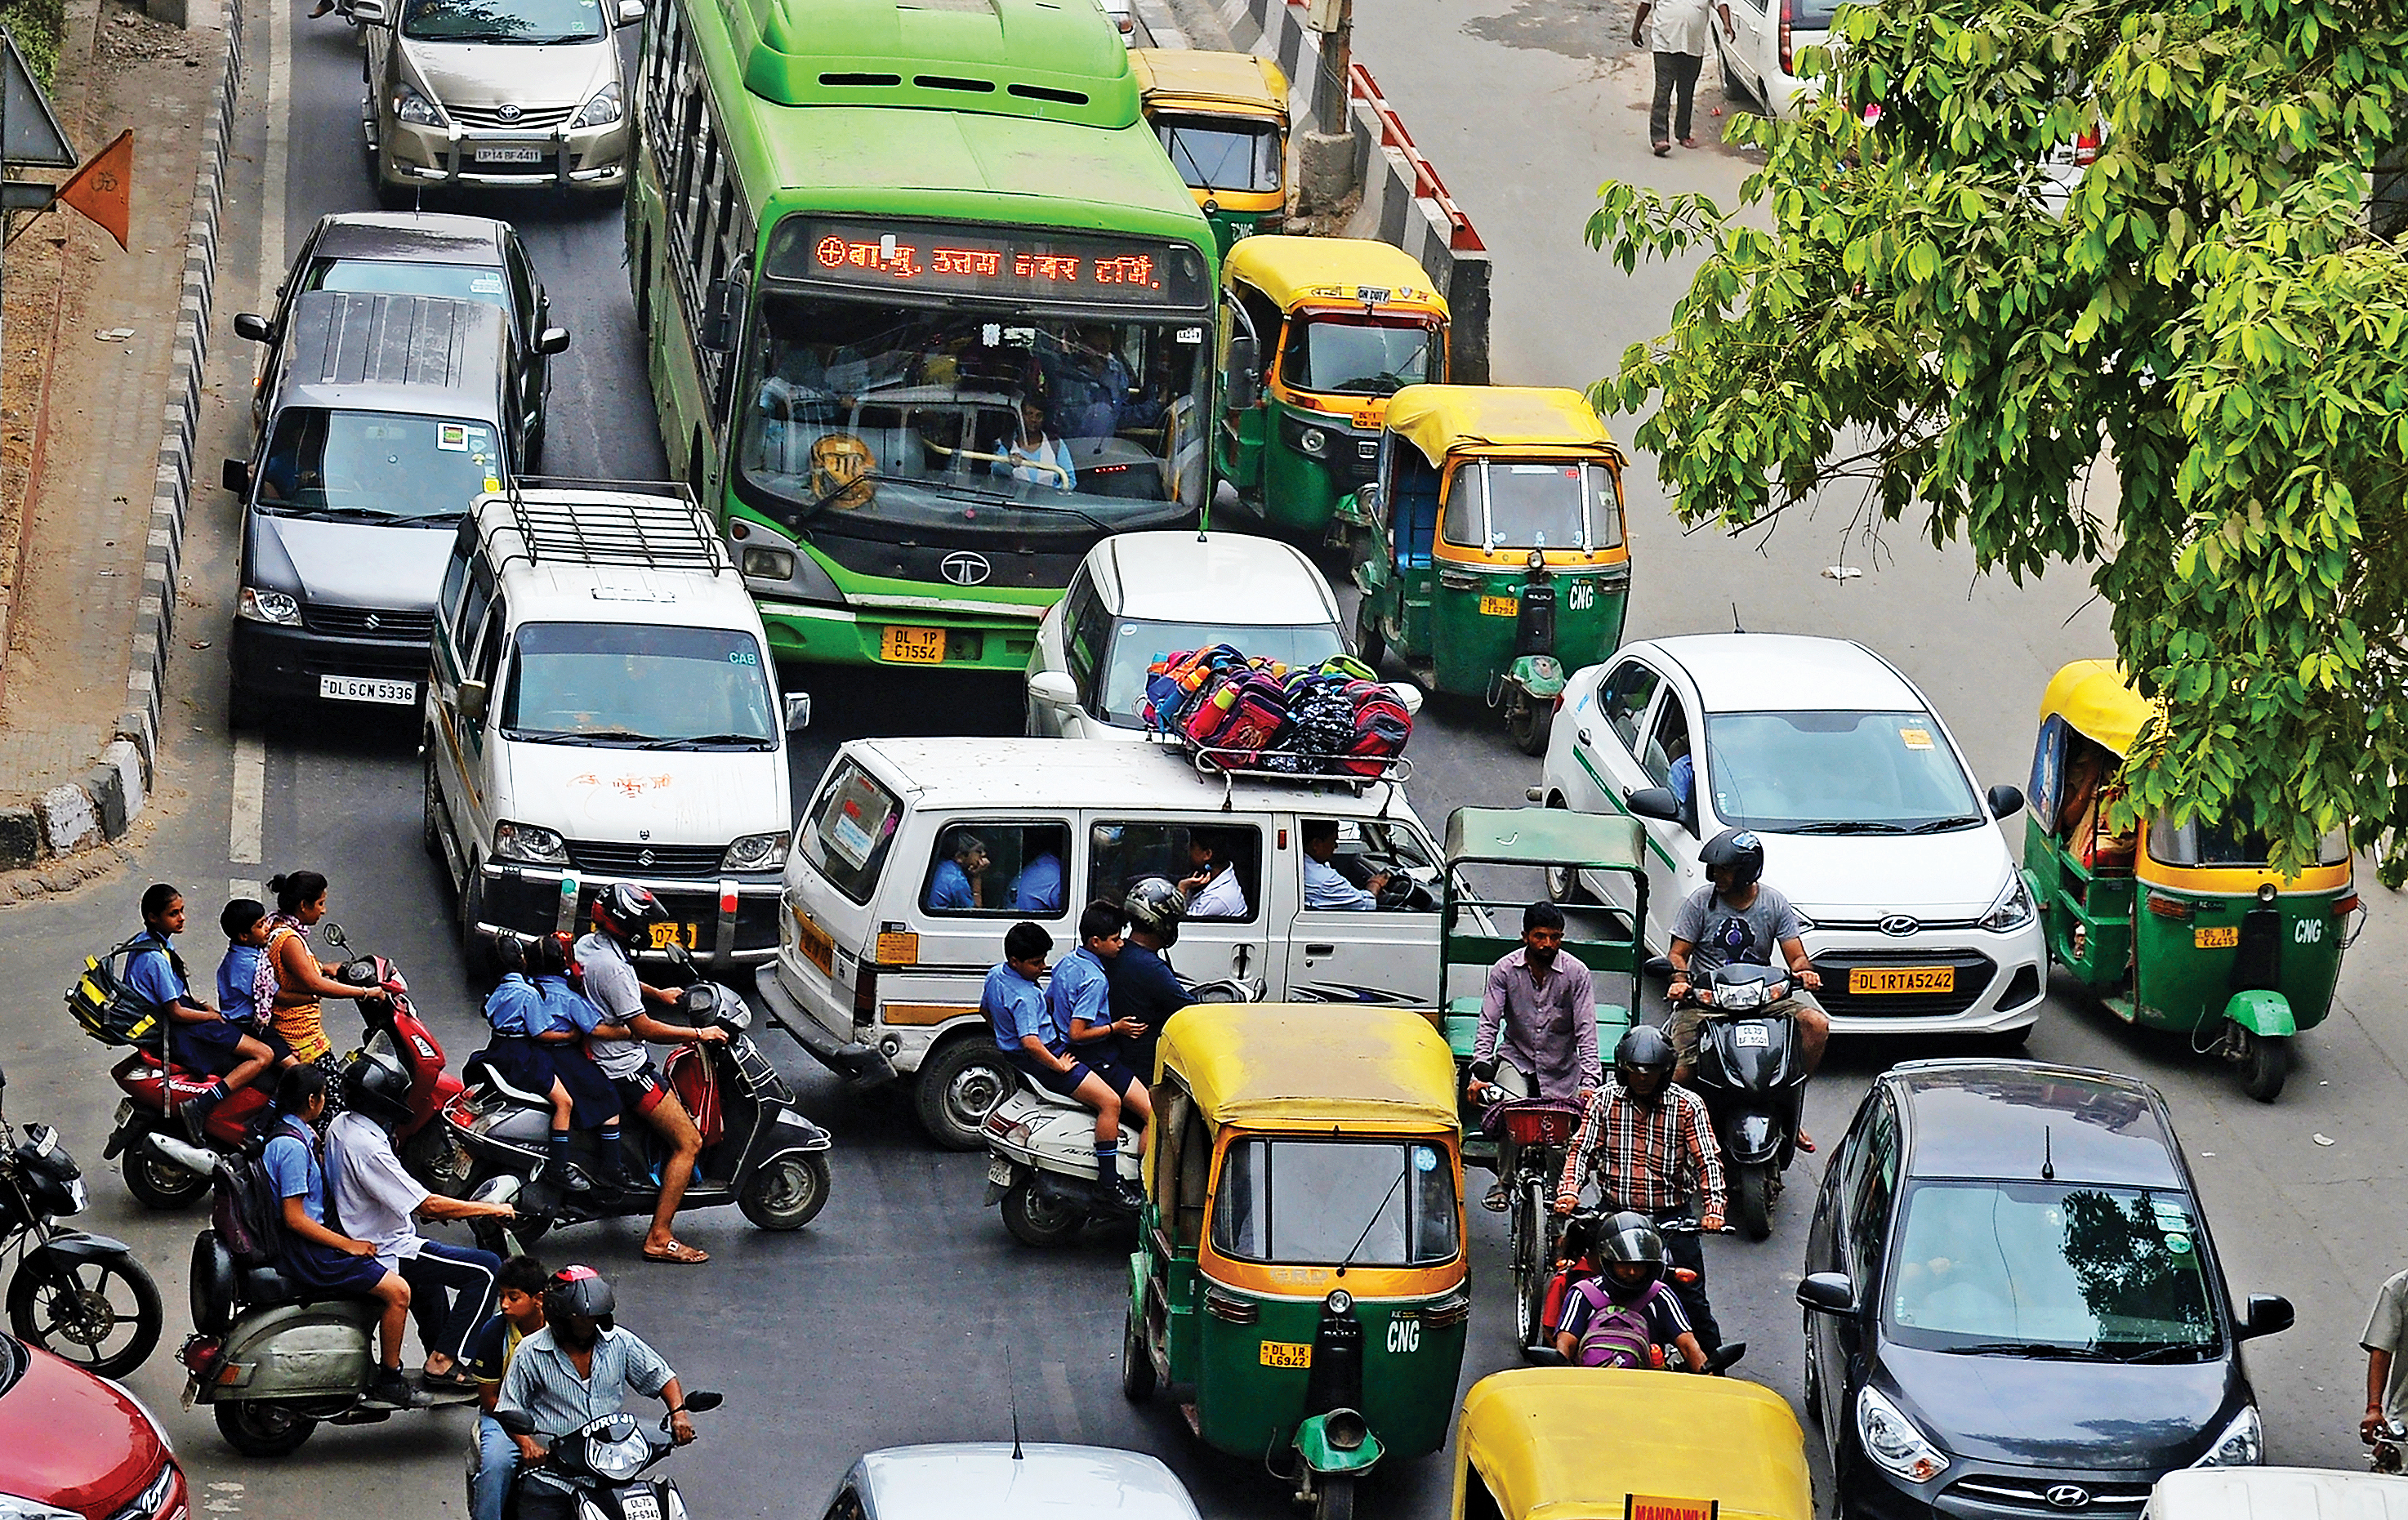 Congress protest, Kanwar Yatra and waterlogging lead to traffic slowdown in central Delhi